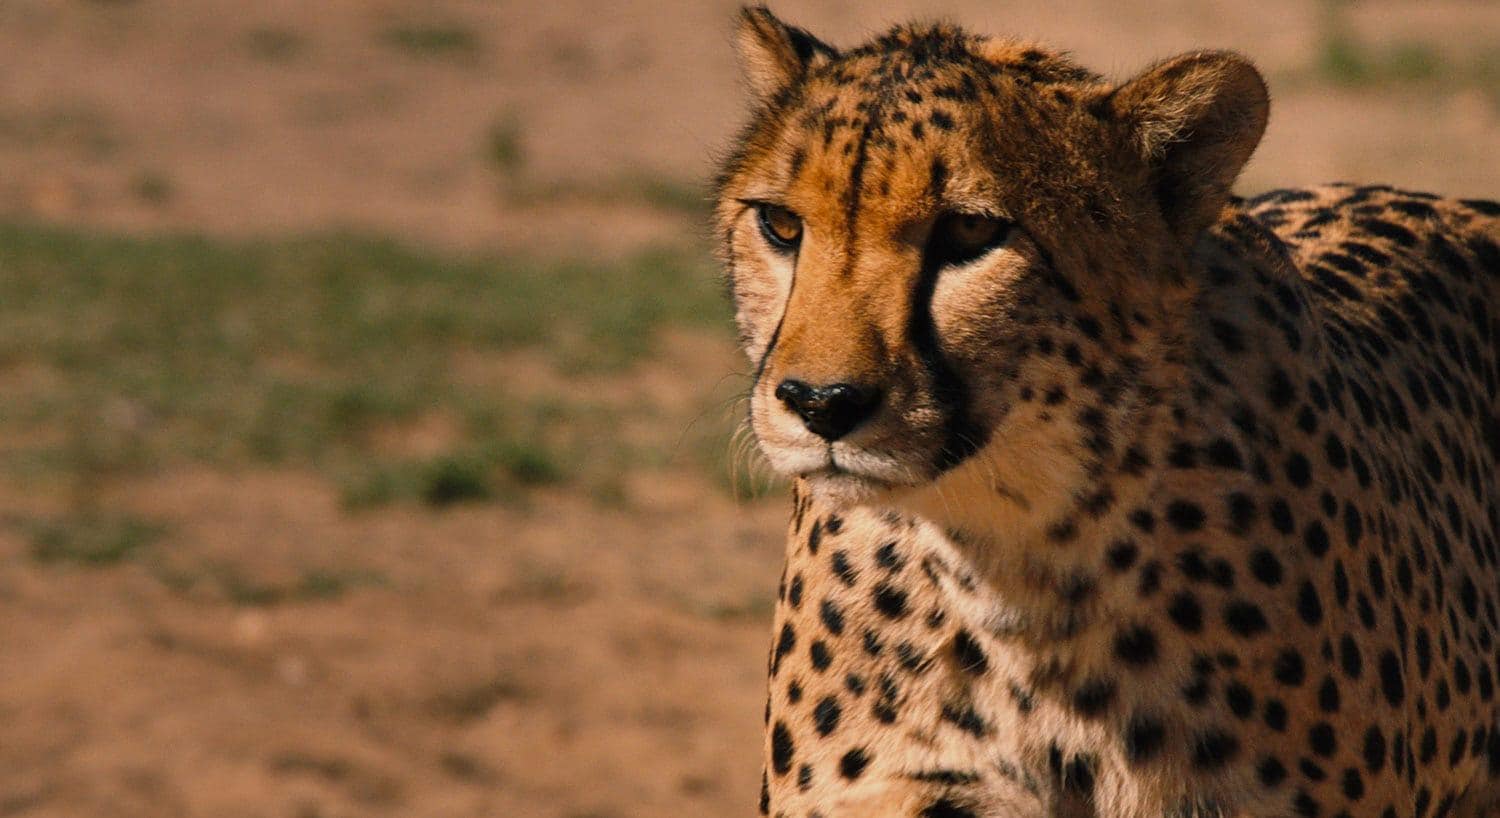 Wildtrack cheetah in the savannah